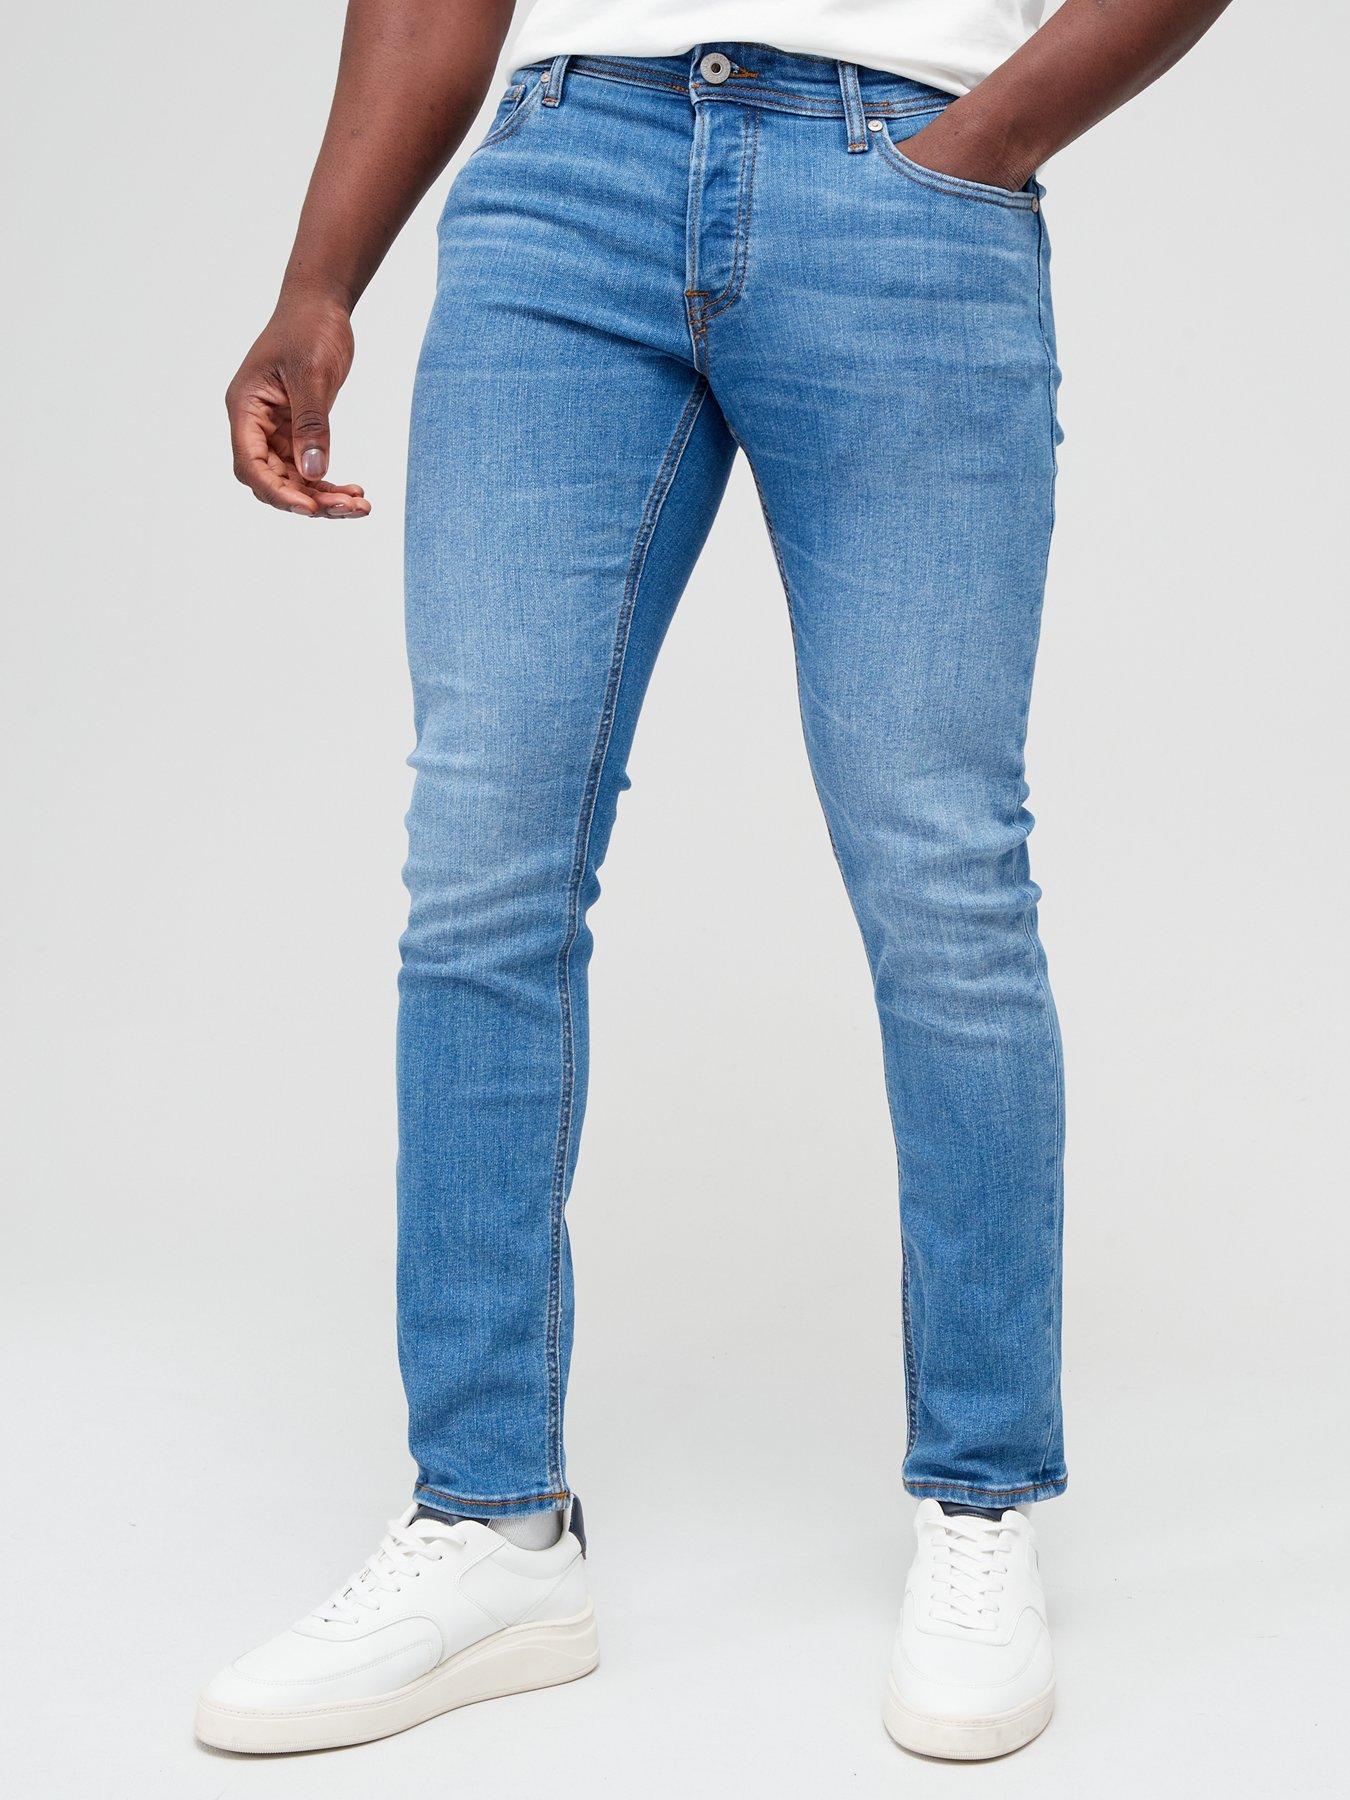 Jeans Jack & Jones Glenn Light Wash Slim Fit Jeans